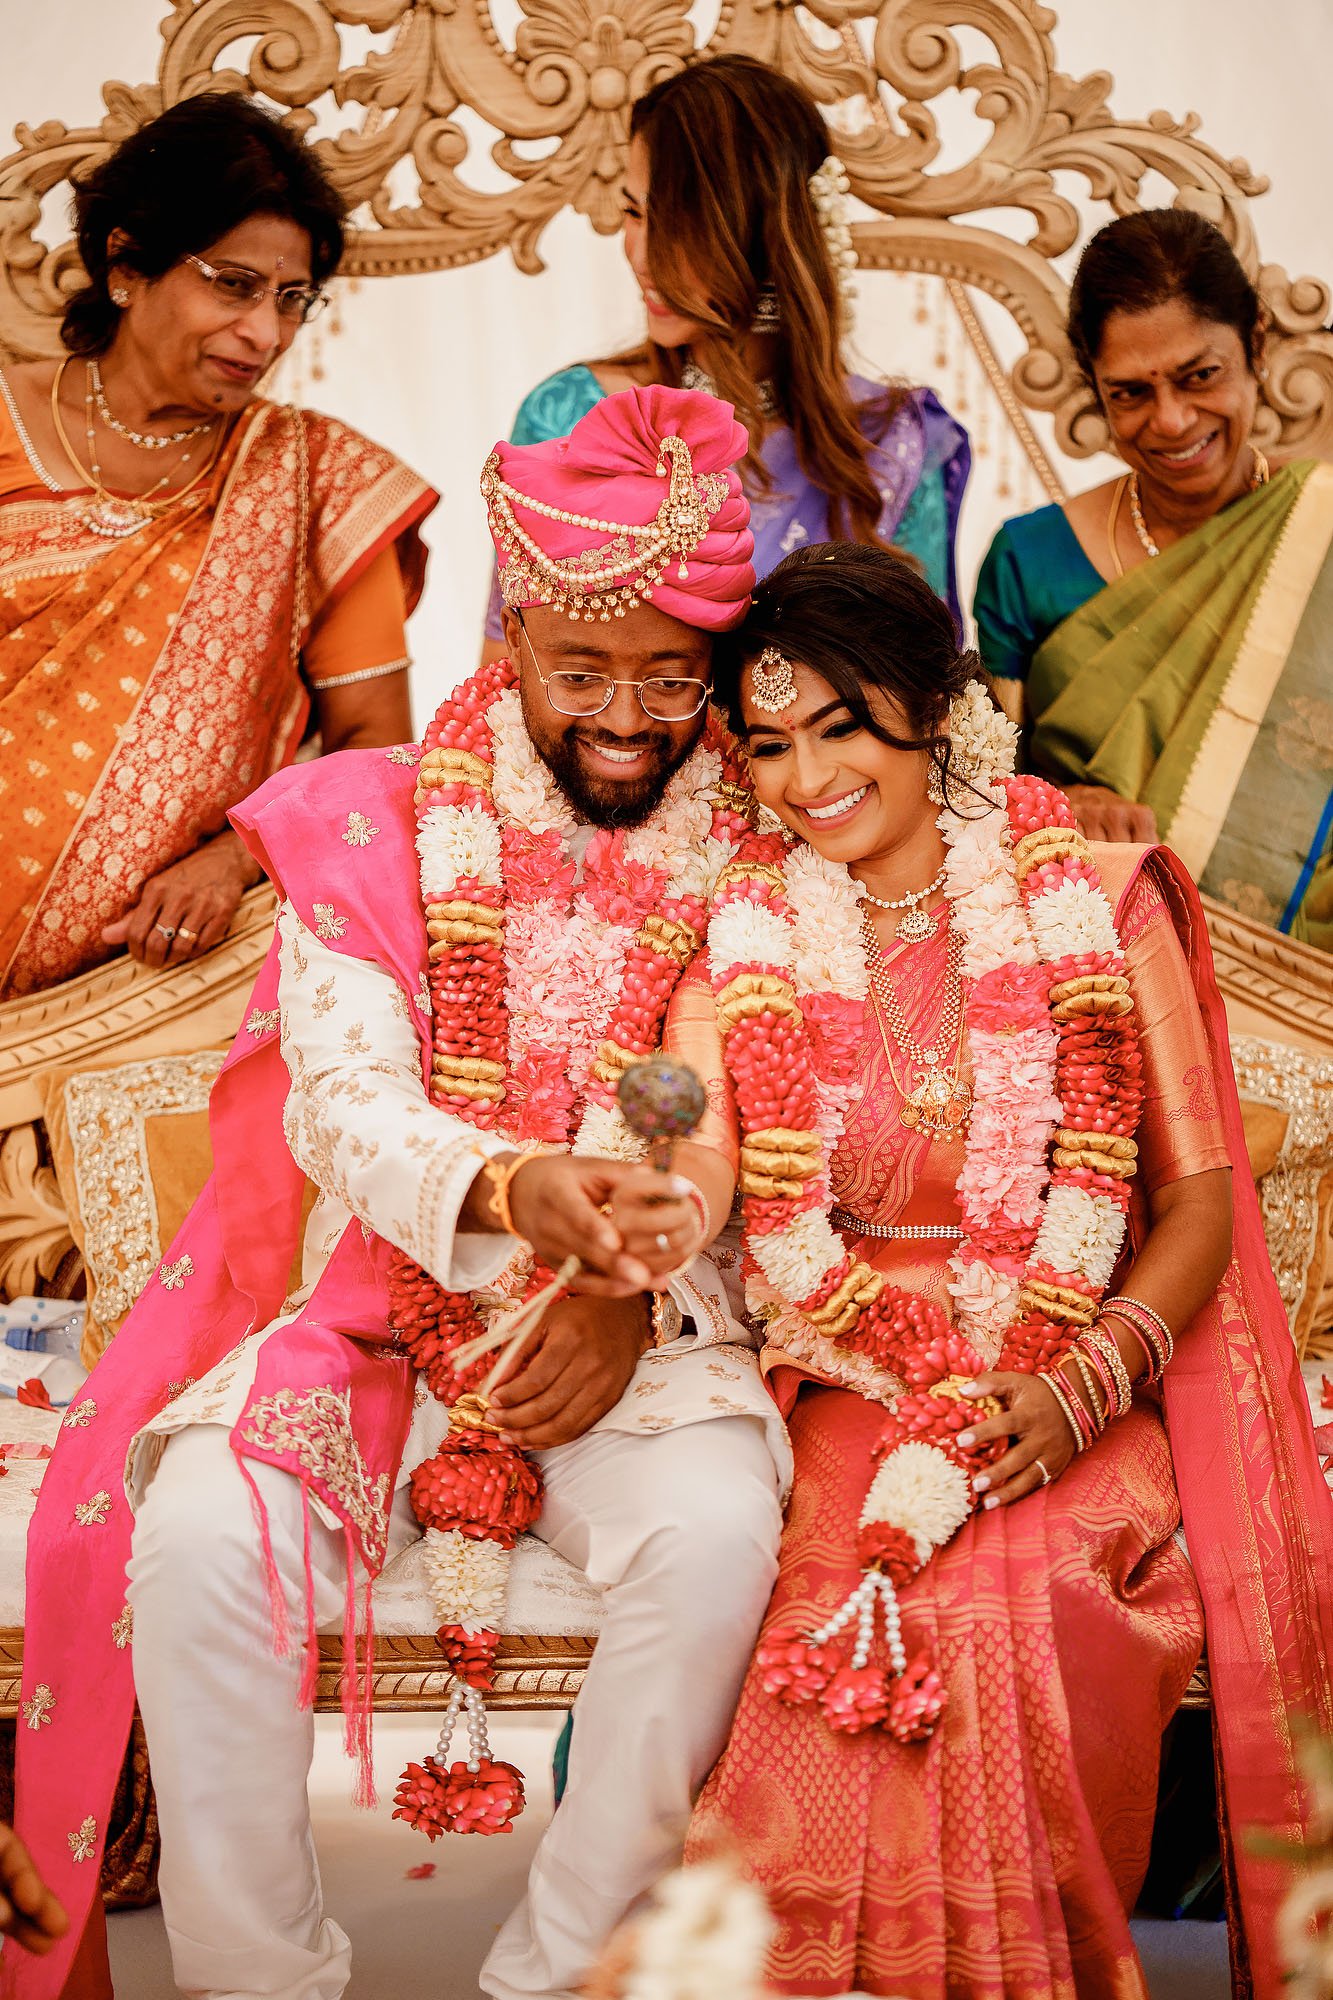 Parklands quendon hall sri lankan hindu wedding photography by arj photography